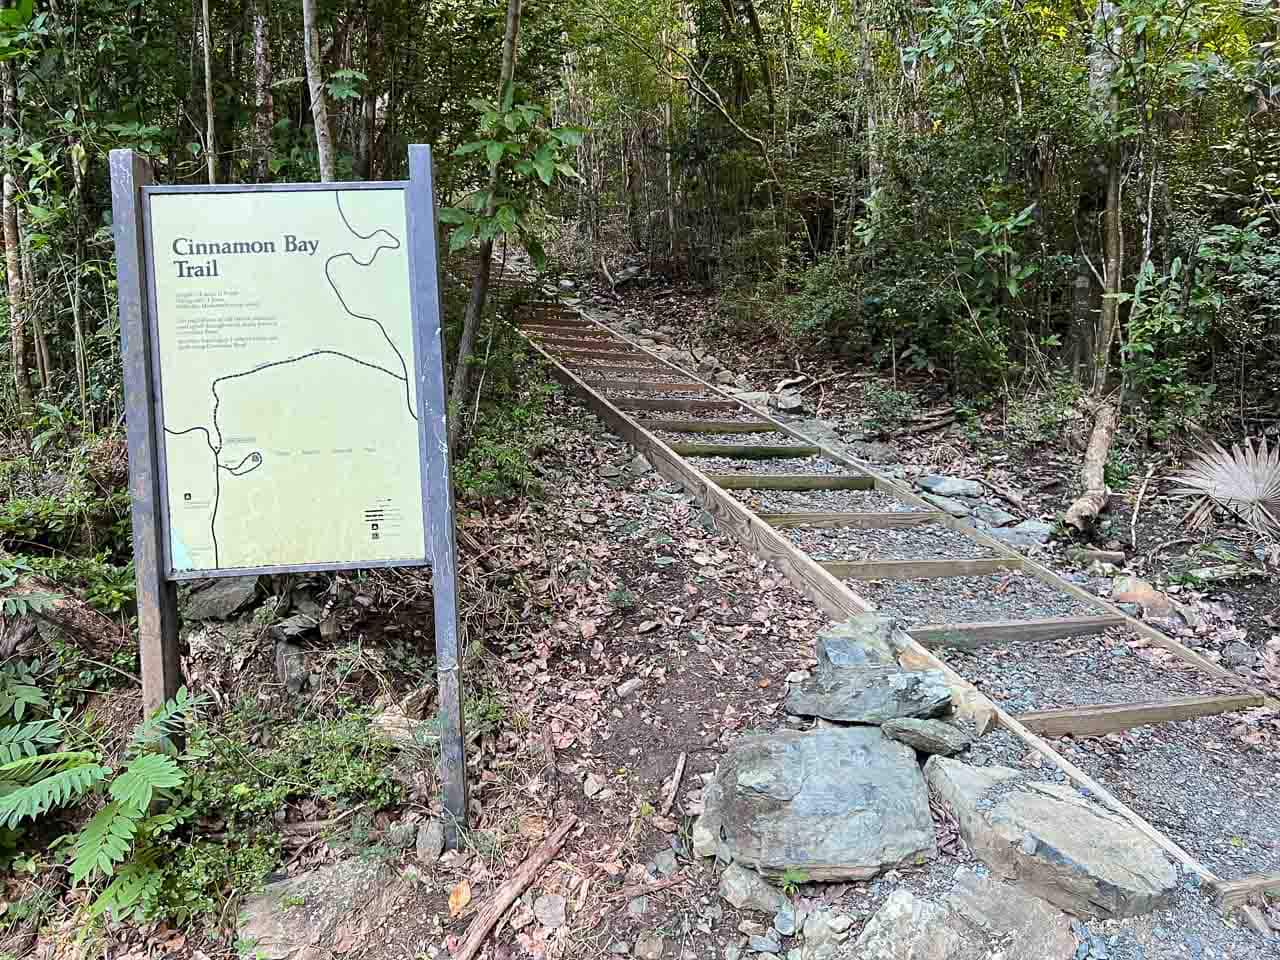 Cinnamon Bay Trail information sign, Virgin Islands National Park